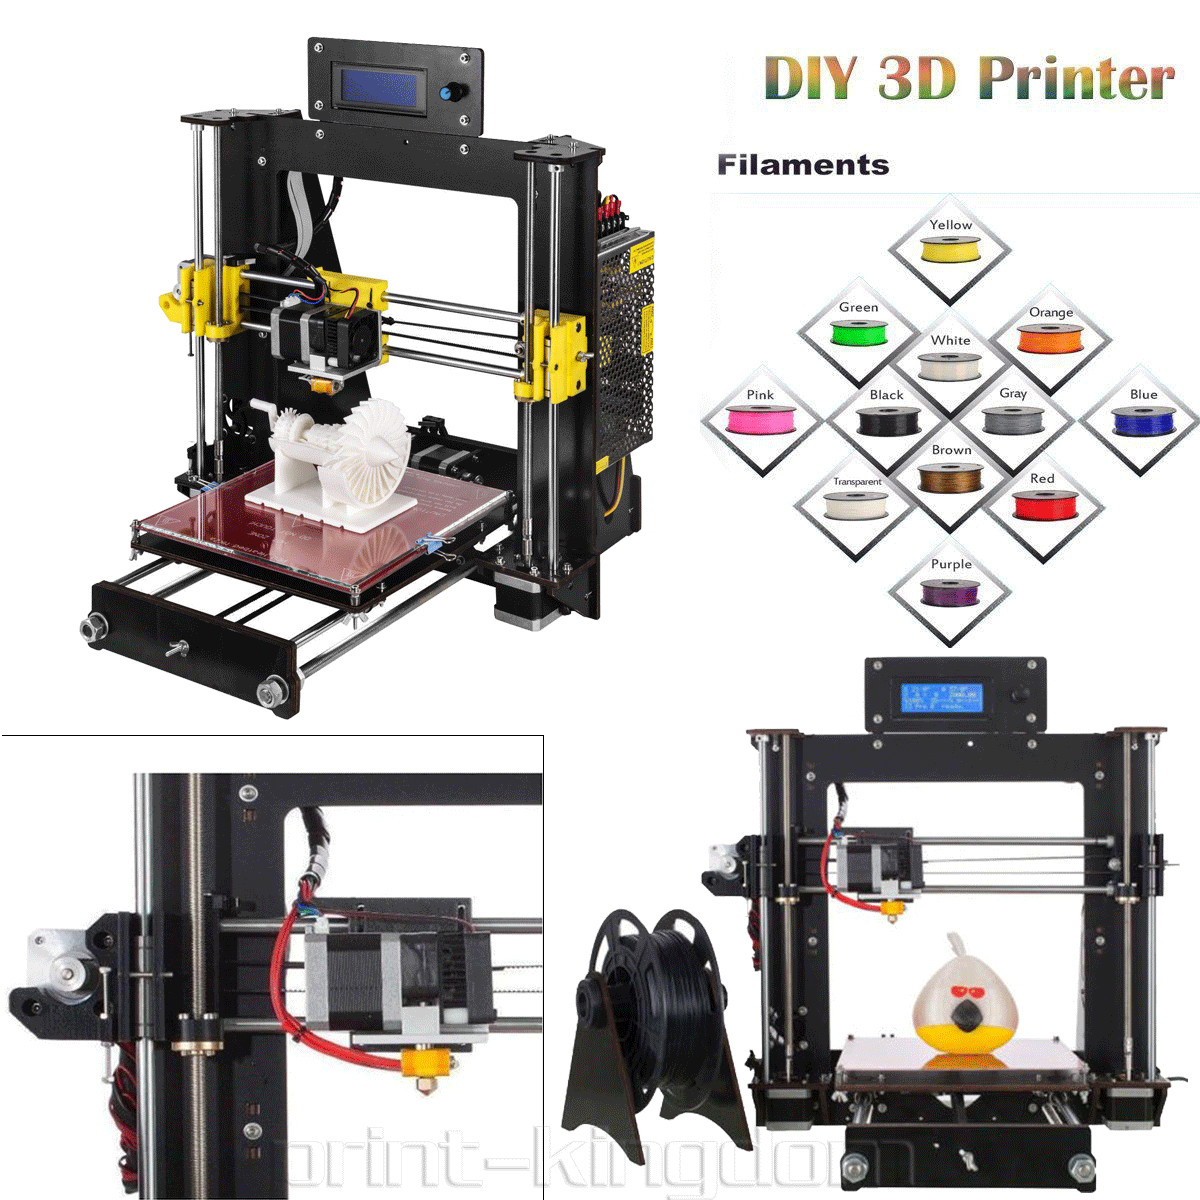 Best ideas about A8 Desktop 3D Printer Prusa I3 DIY Kit
. Save or Pin CTC A8 Upgraded Quality High Precision Desktop 3D Printer Now.